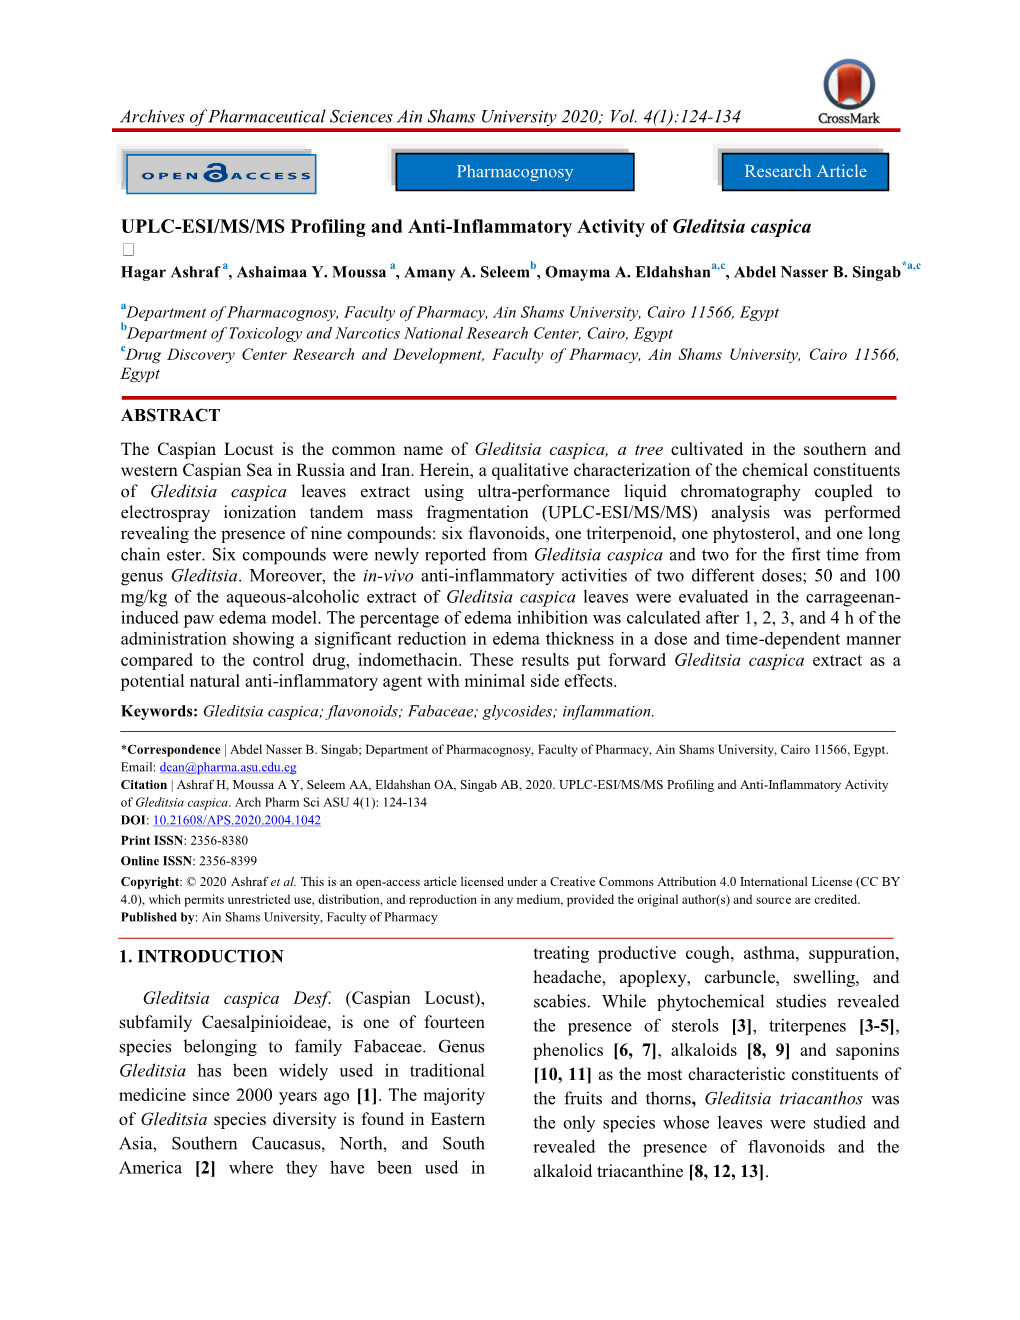 UPLC-ESI/MS/MS Profiling and Anti-Inflammatory Activity of Gleditsia Caspica